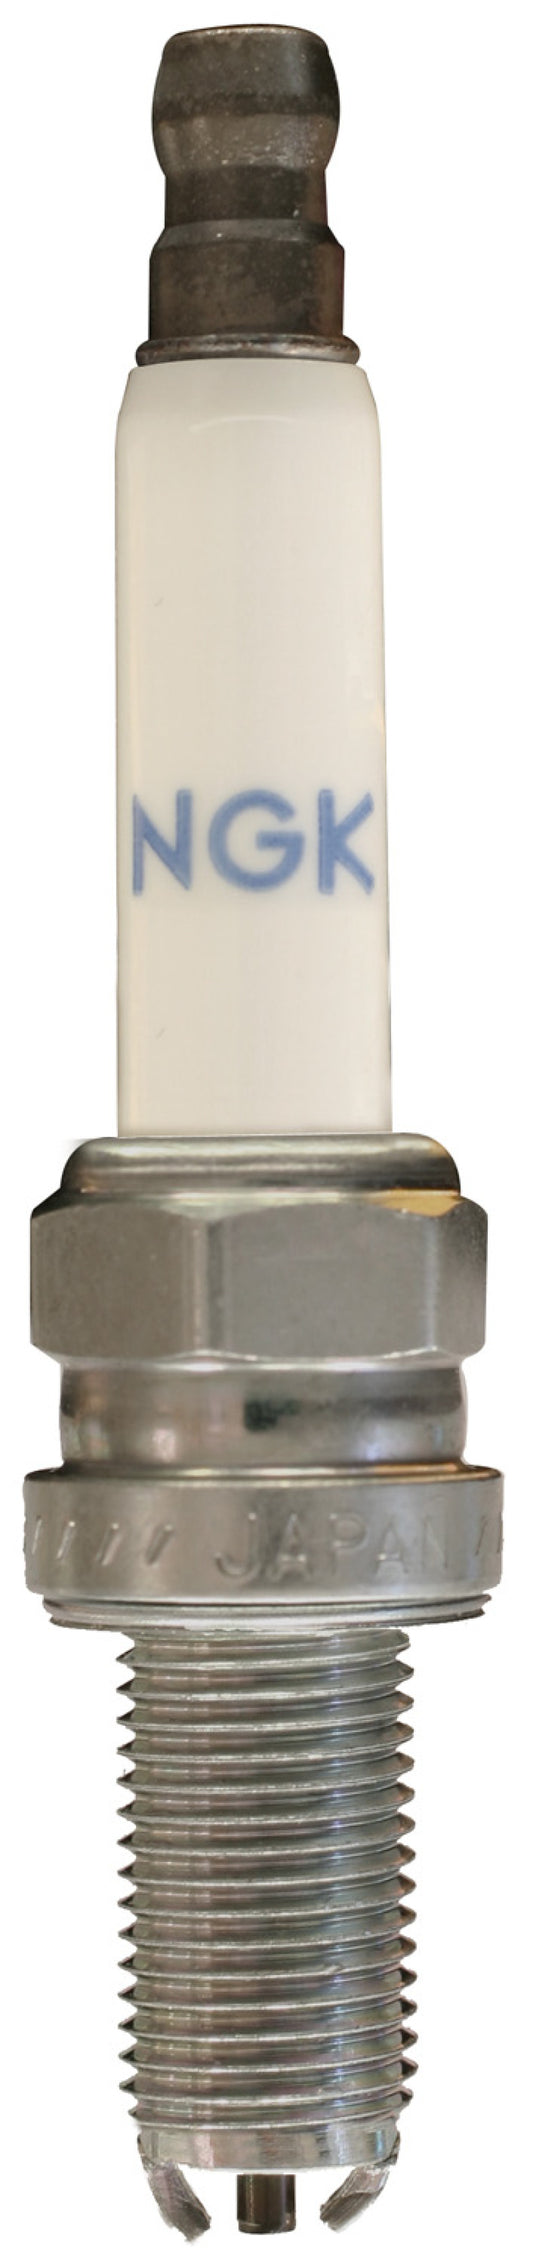 NGK Standard Spark Plug Box of 10 (MAR10A-J)